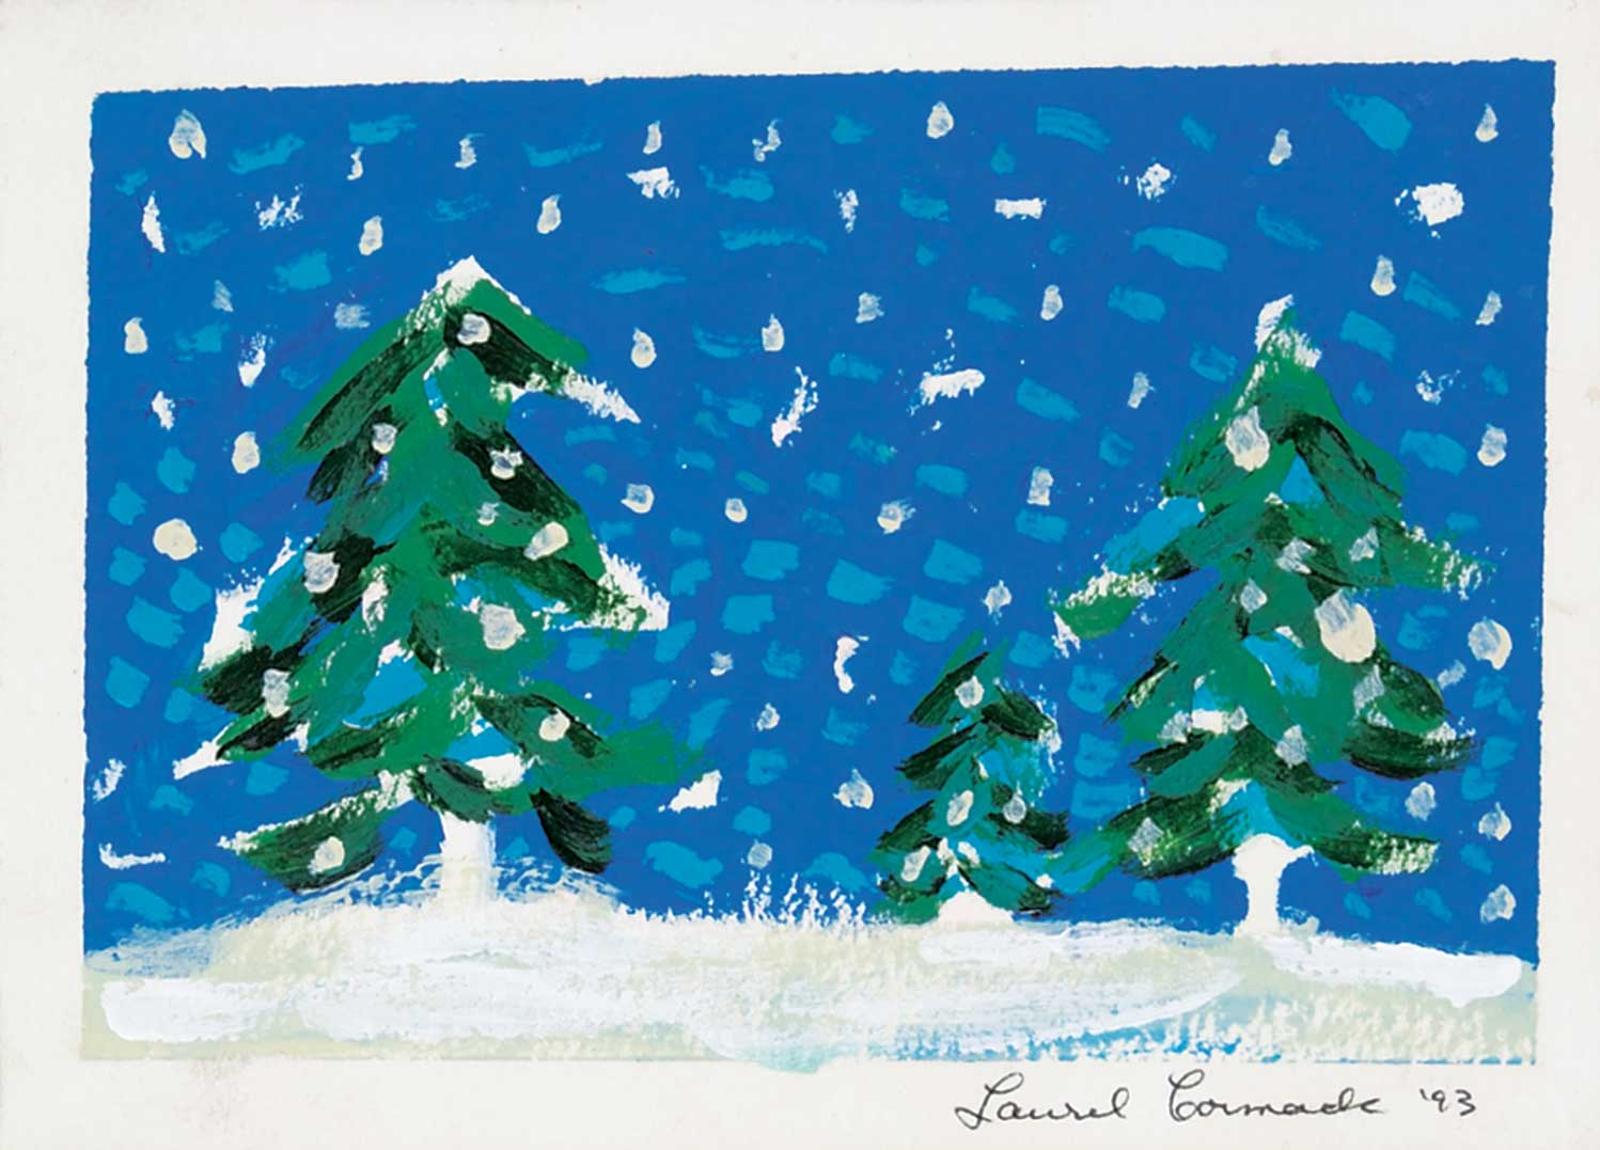 Laurel J.V. Cormack (1935) - Untitled - Winter Christmas Trees